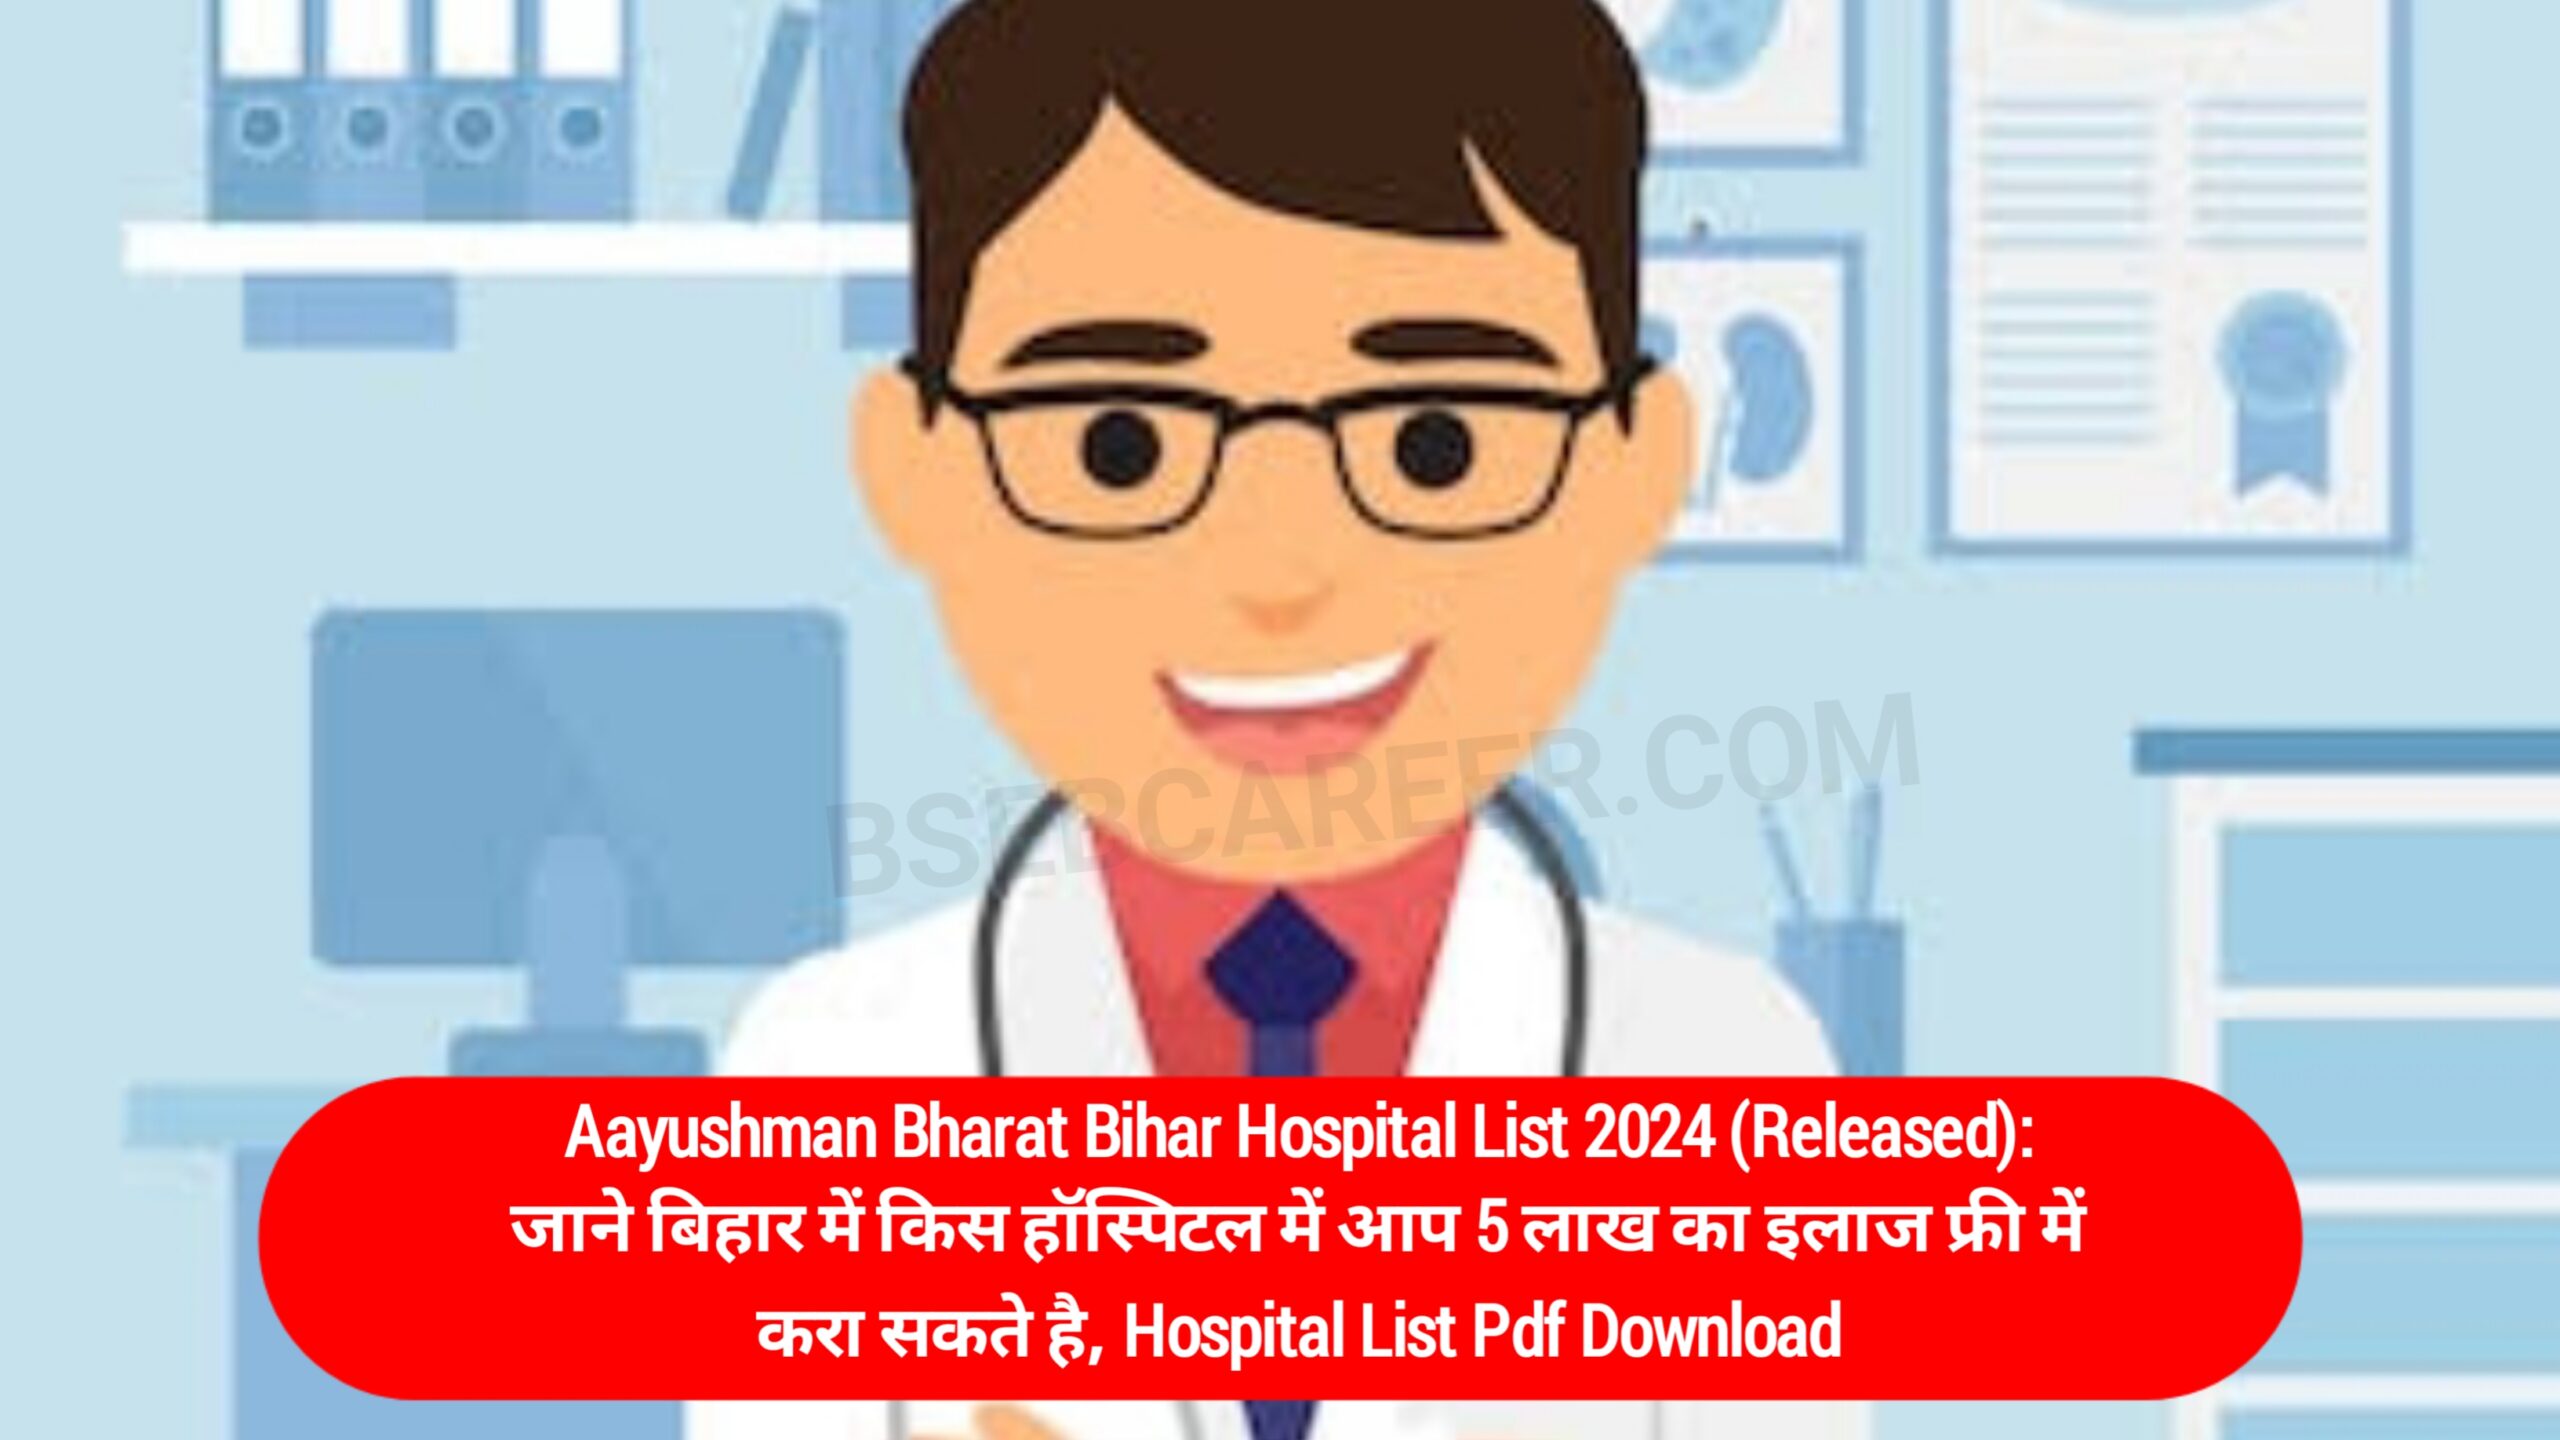 Aayushman Bharat Bihar Hospital List 2024